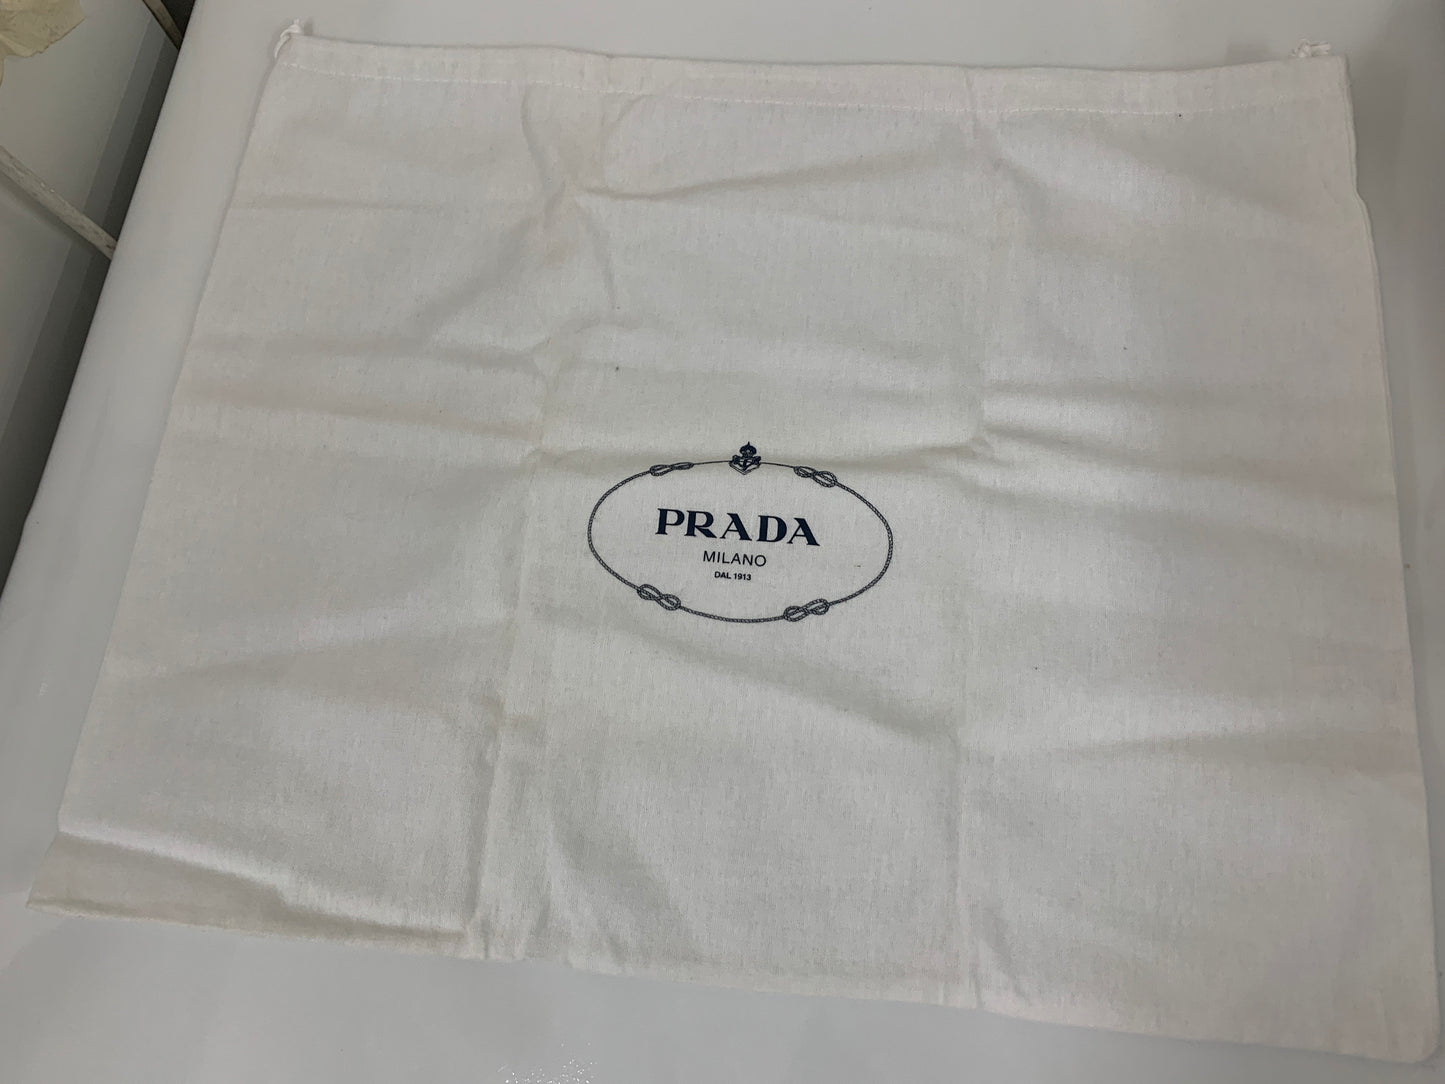 Chanel Prada Coach Burberry Fendi Lancel dust bag handbag Set